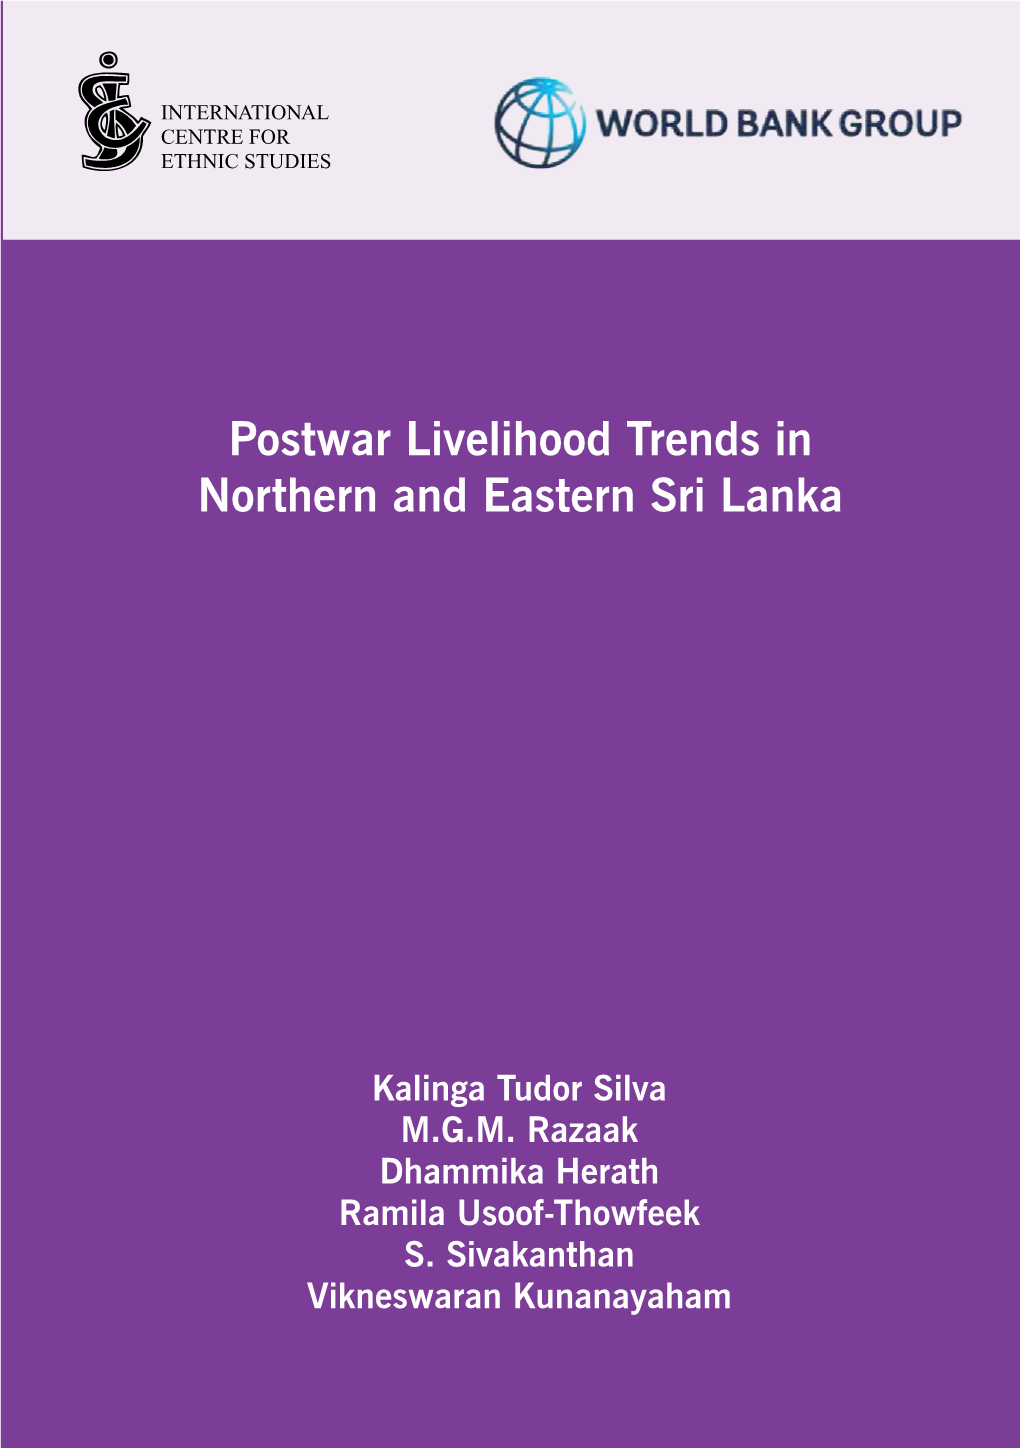 Post-War Livelihood Trends in Northern and Eastern Sri Lanka